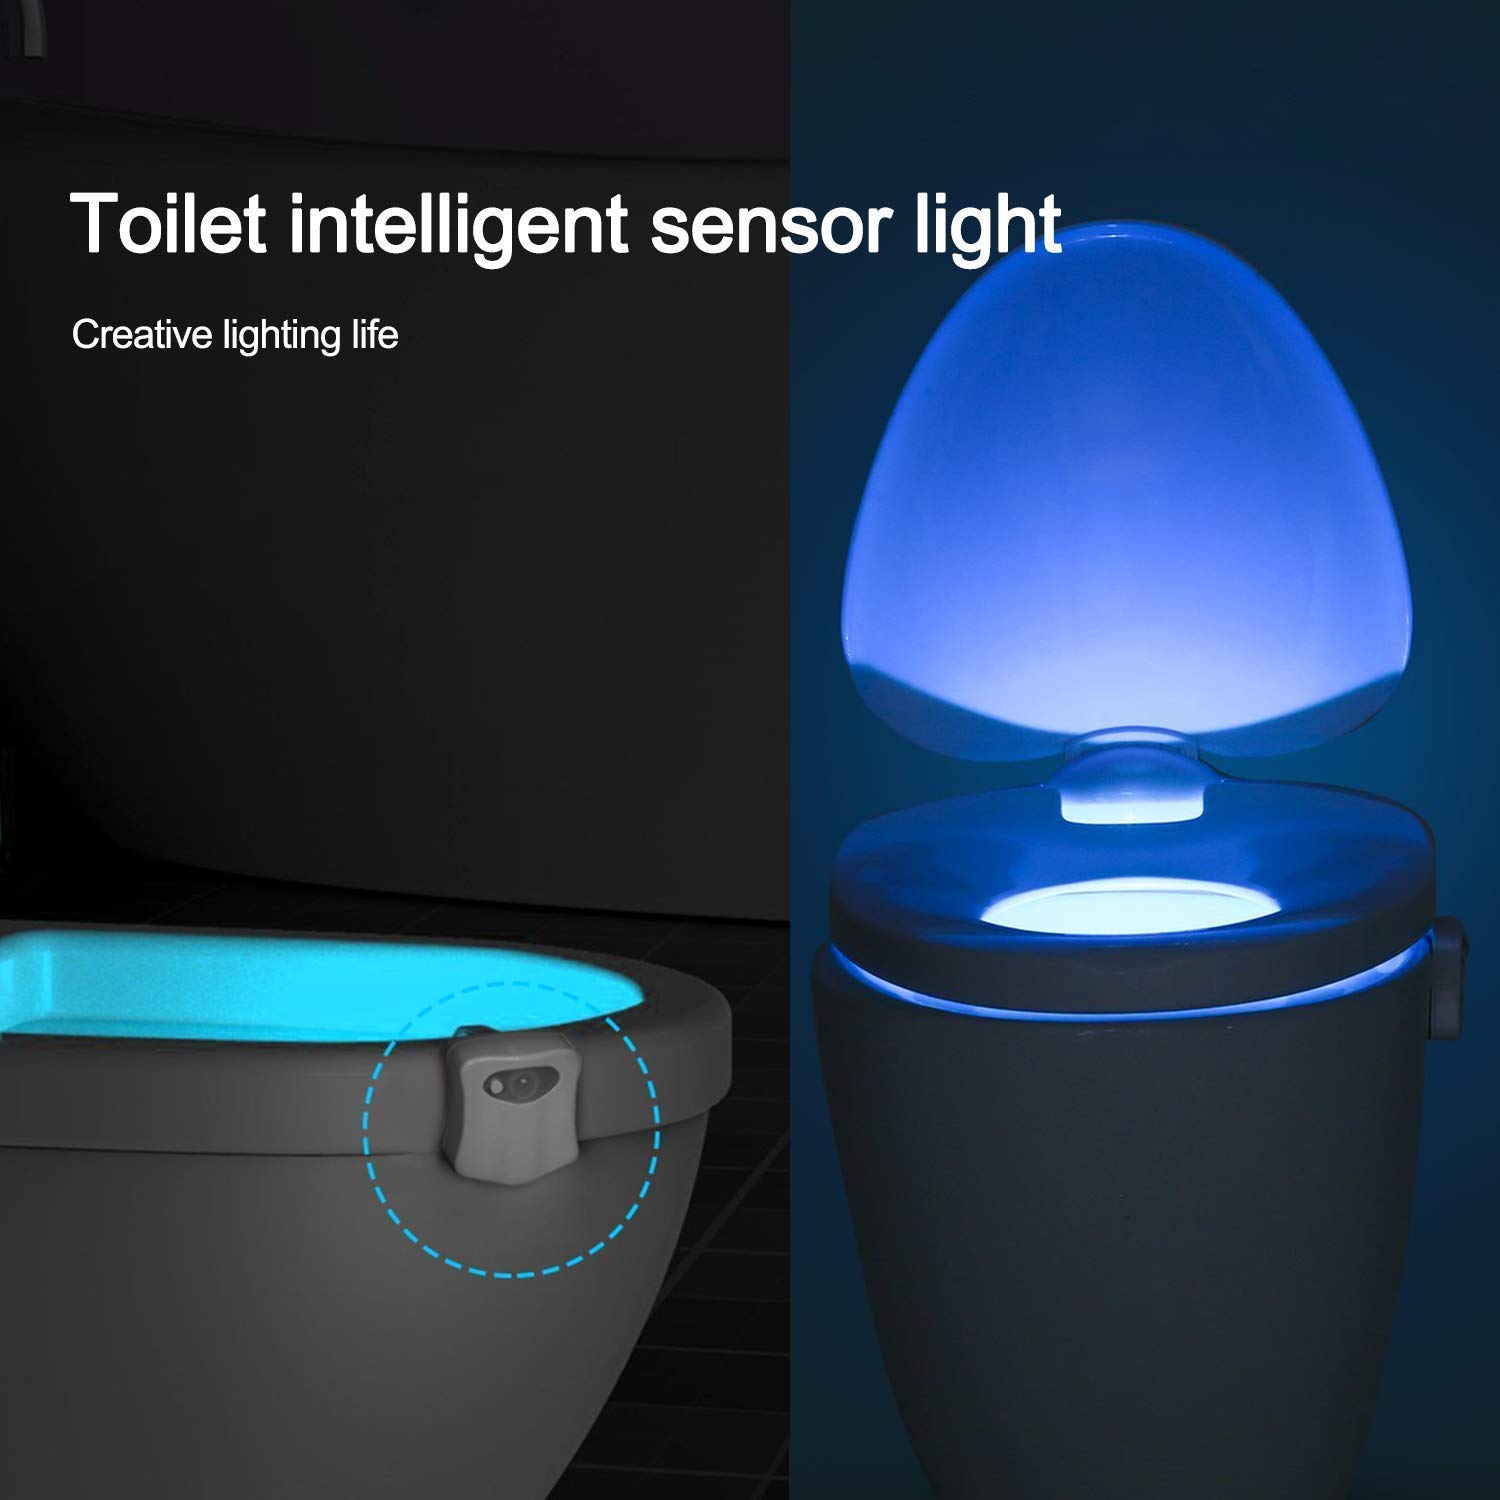 As Seen on TV Bowl Light Motion-Activated LED Toilet Light, 1 Each